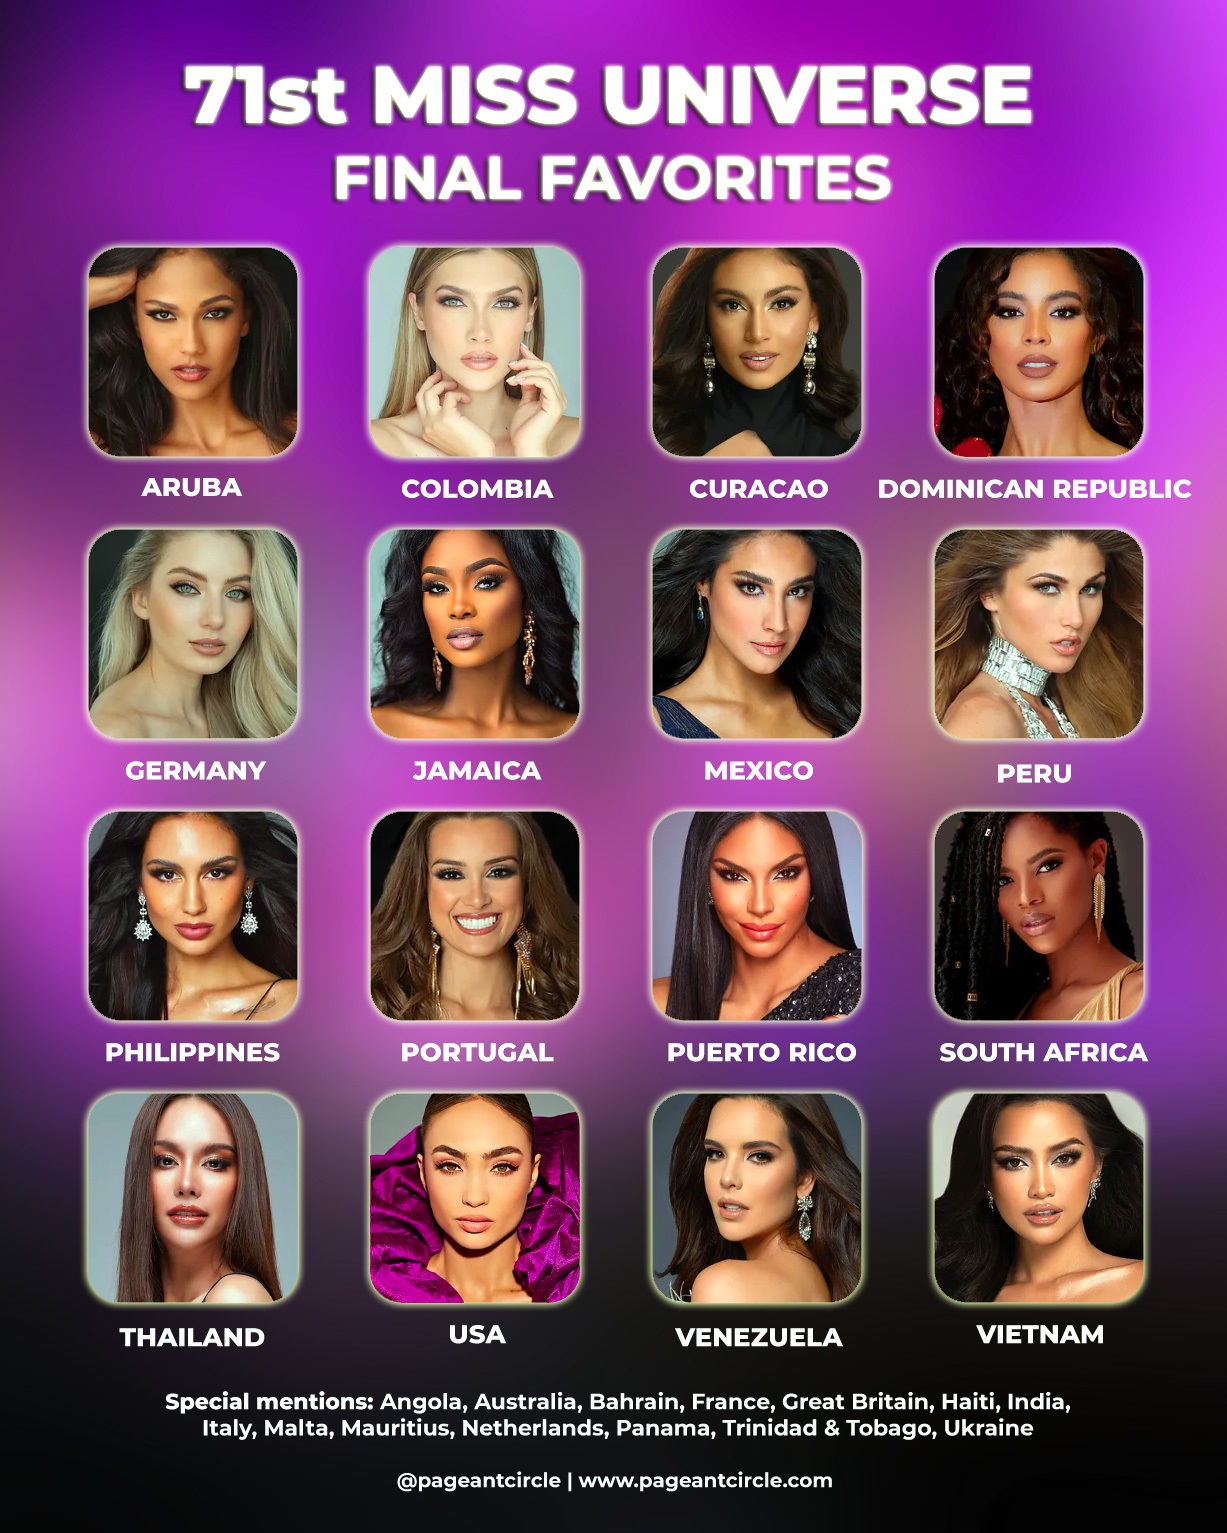 FAVORITES 71st Miss Universe Top 16 final favorites